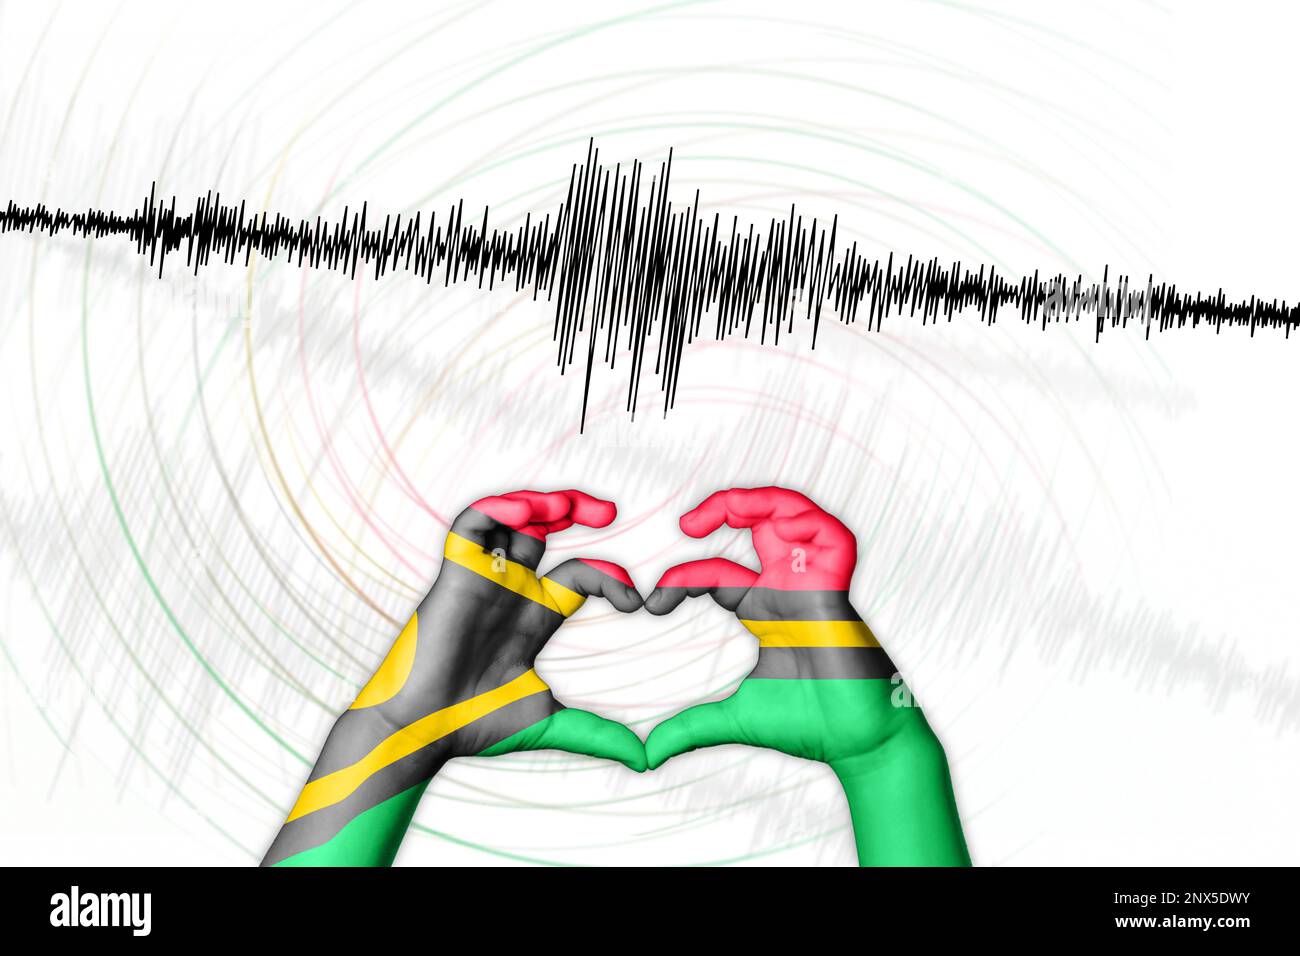 Erdbeben, Erdbeben, Vanuatu-Symbol der Heart Richter Scale Stockfoto